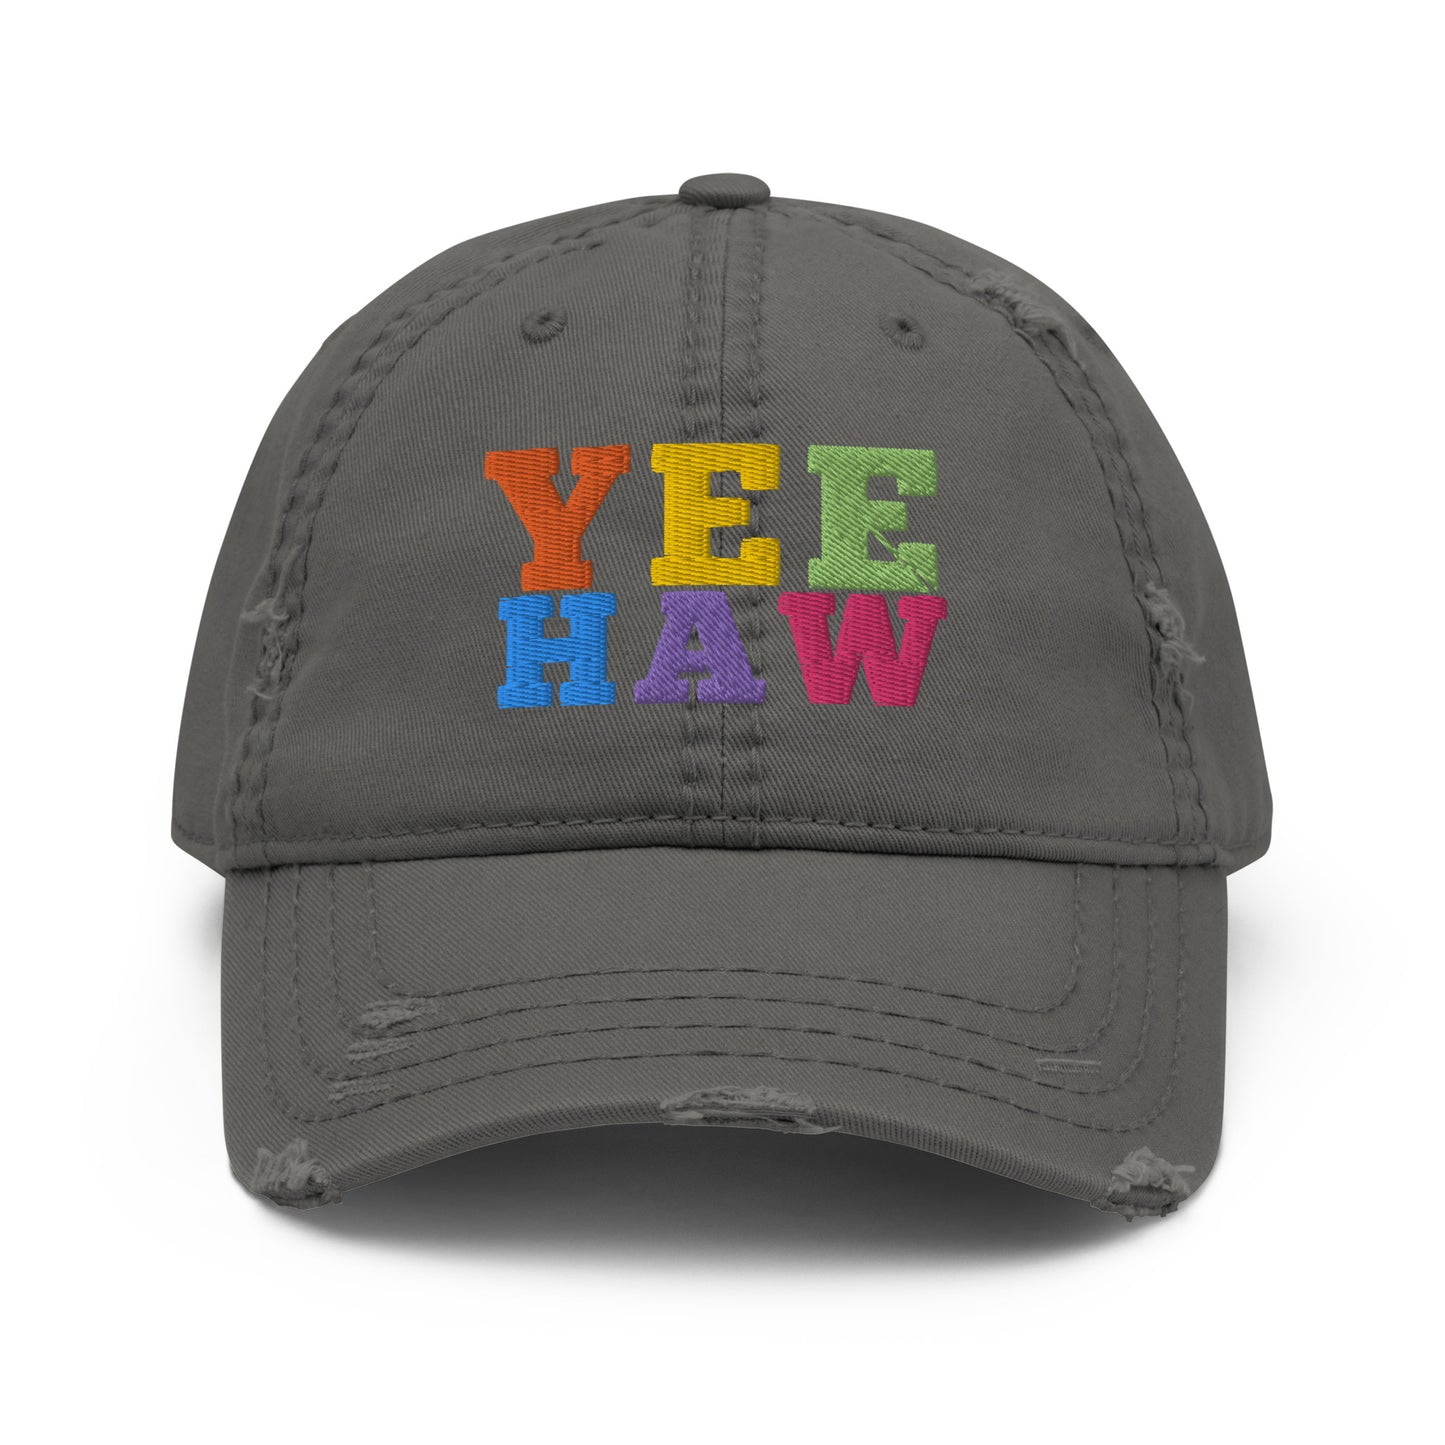 Yeehaw Hat